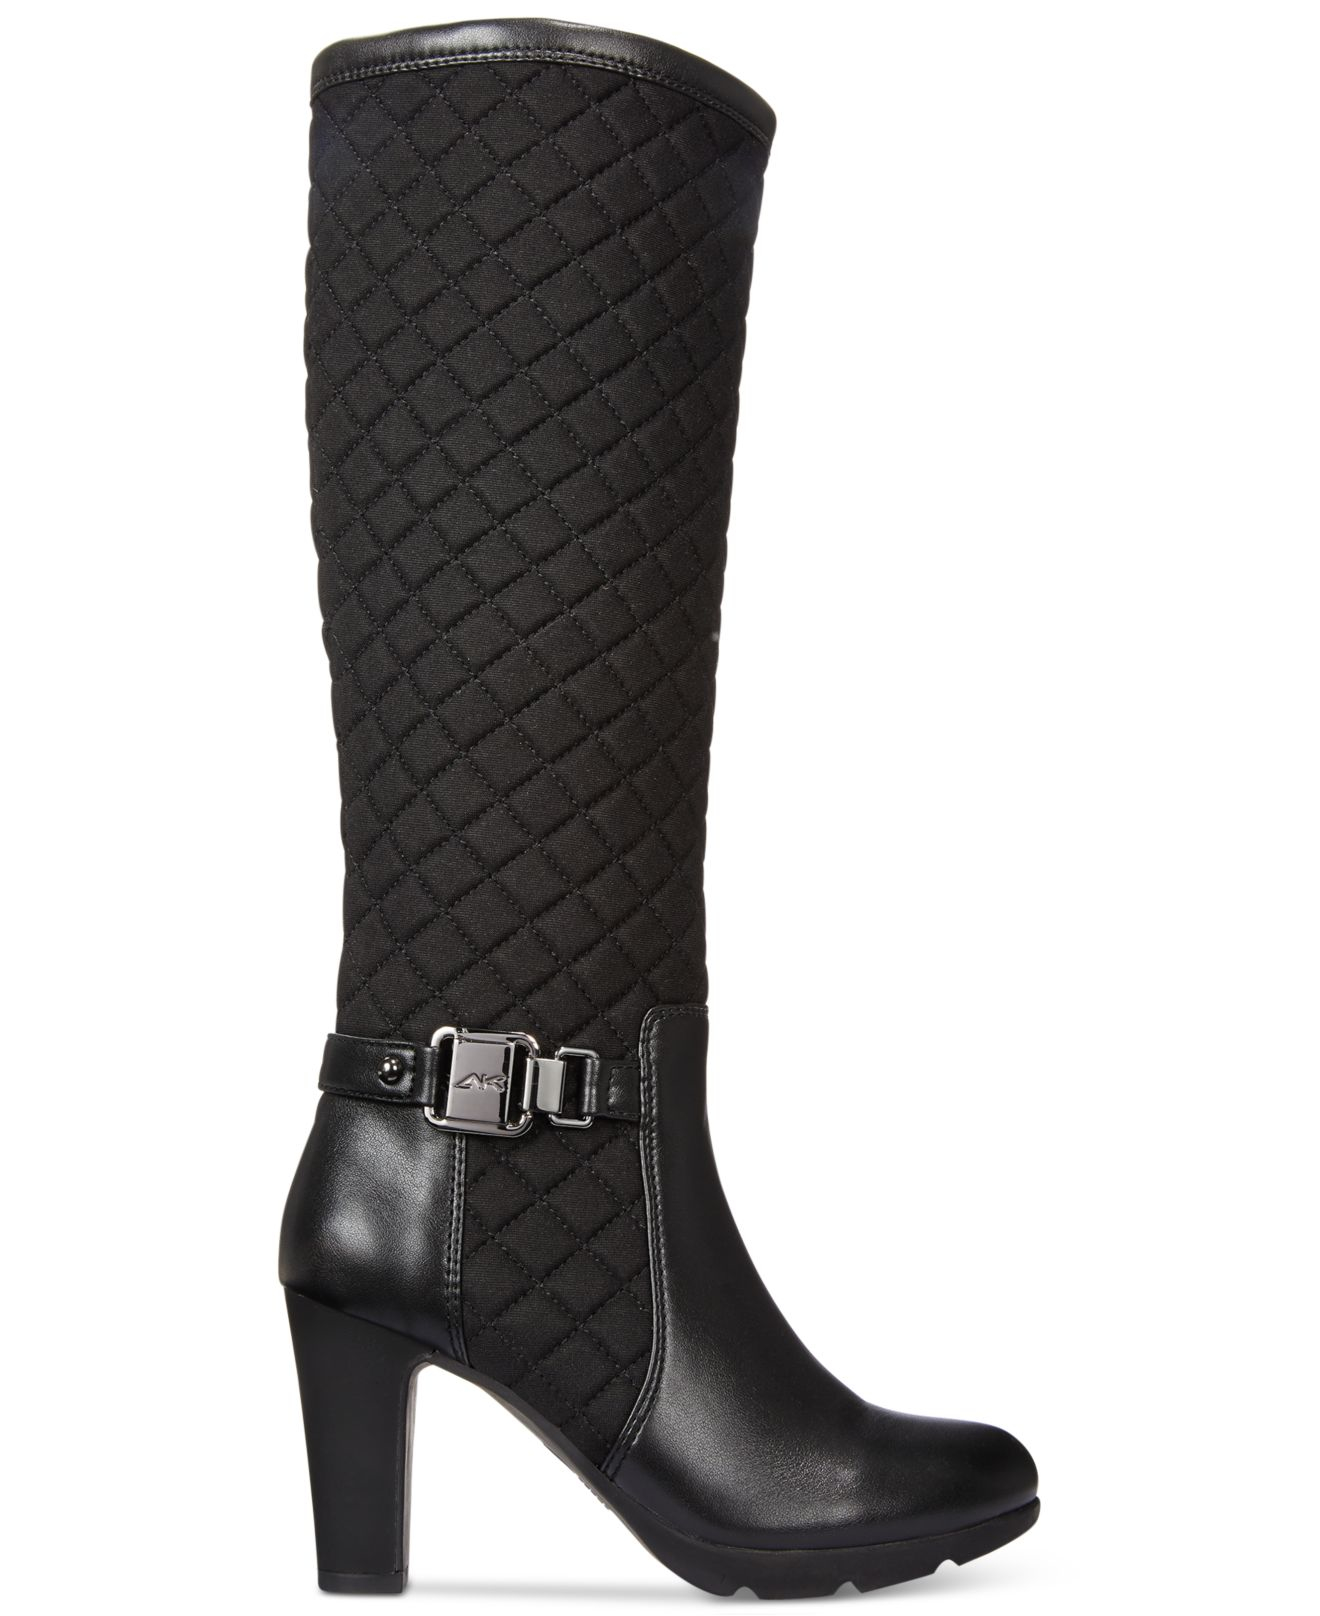 Lyst - Anne Klein Xtended Dress Boots in Black